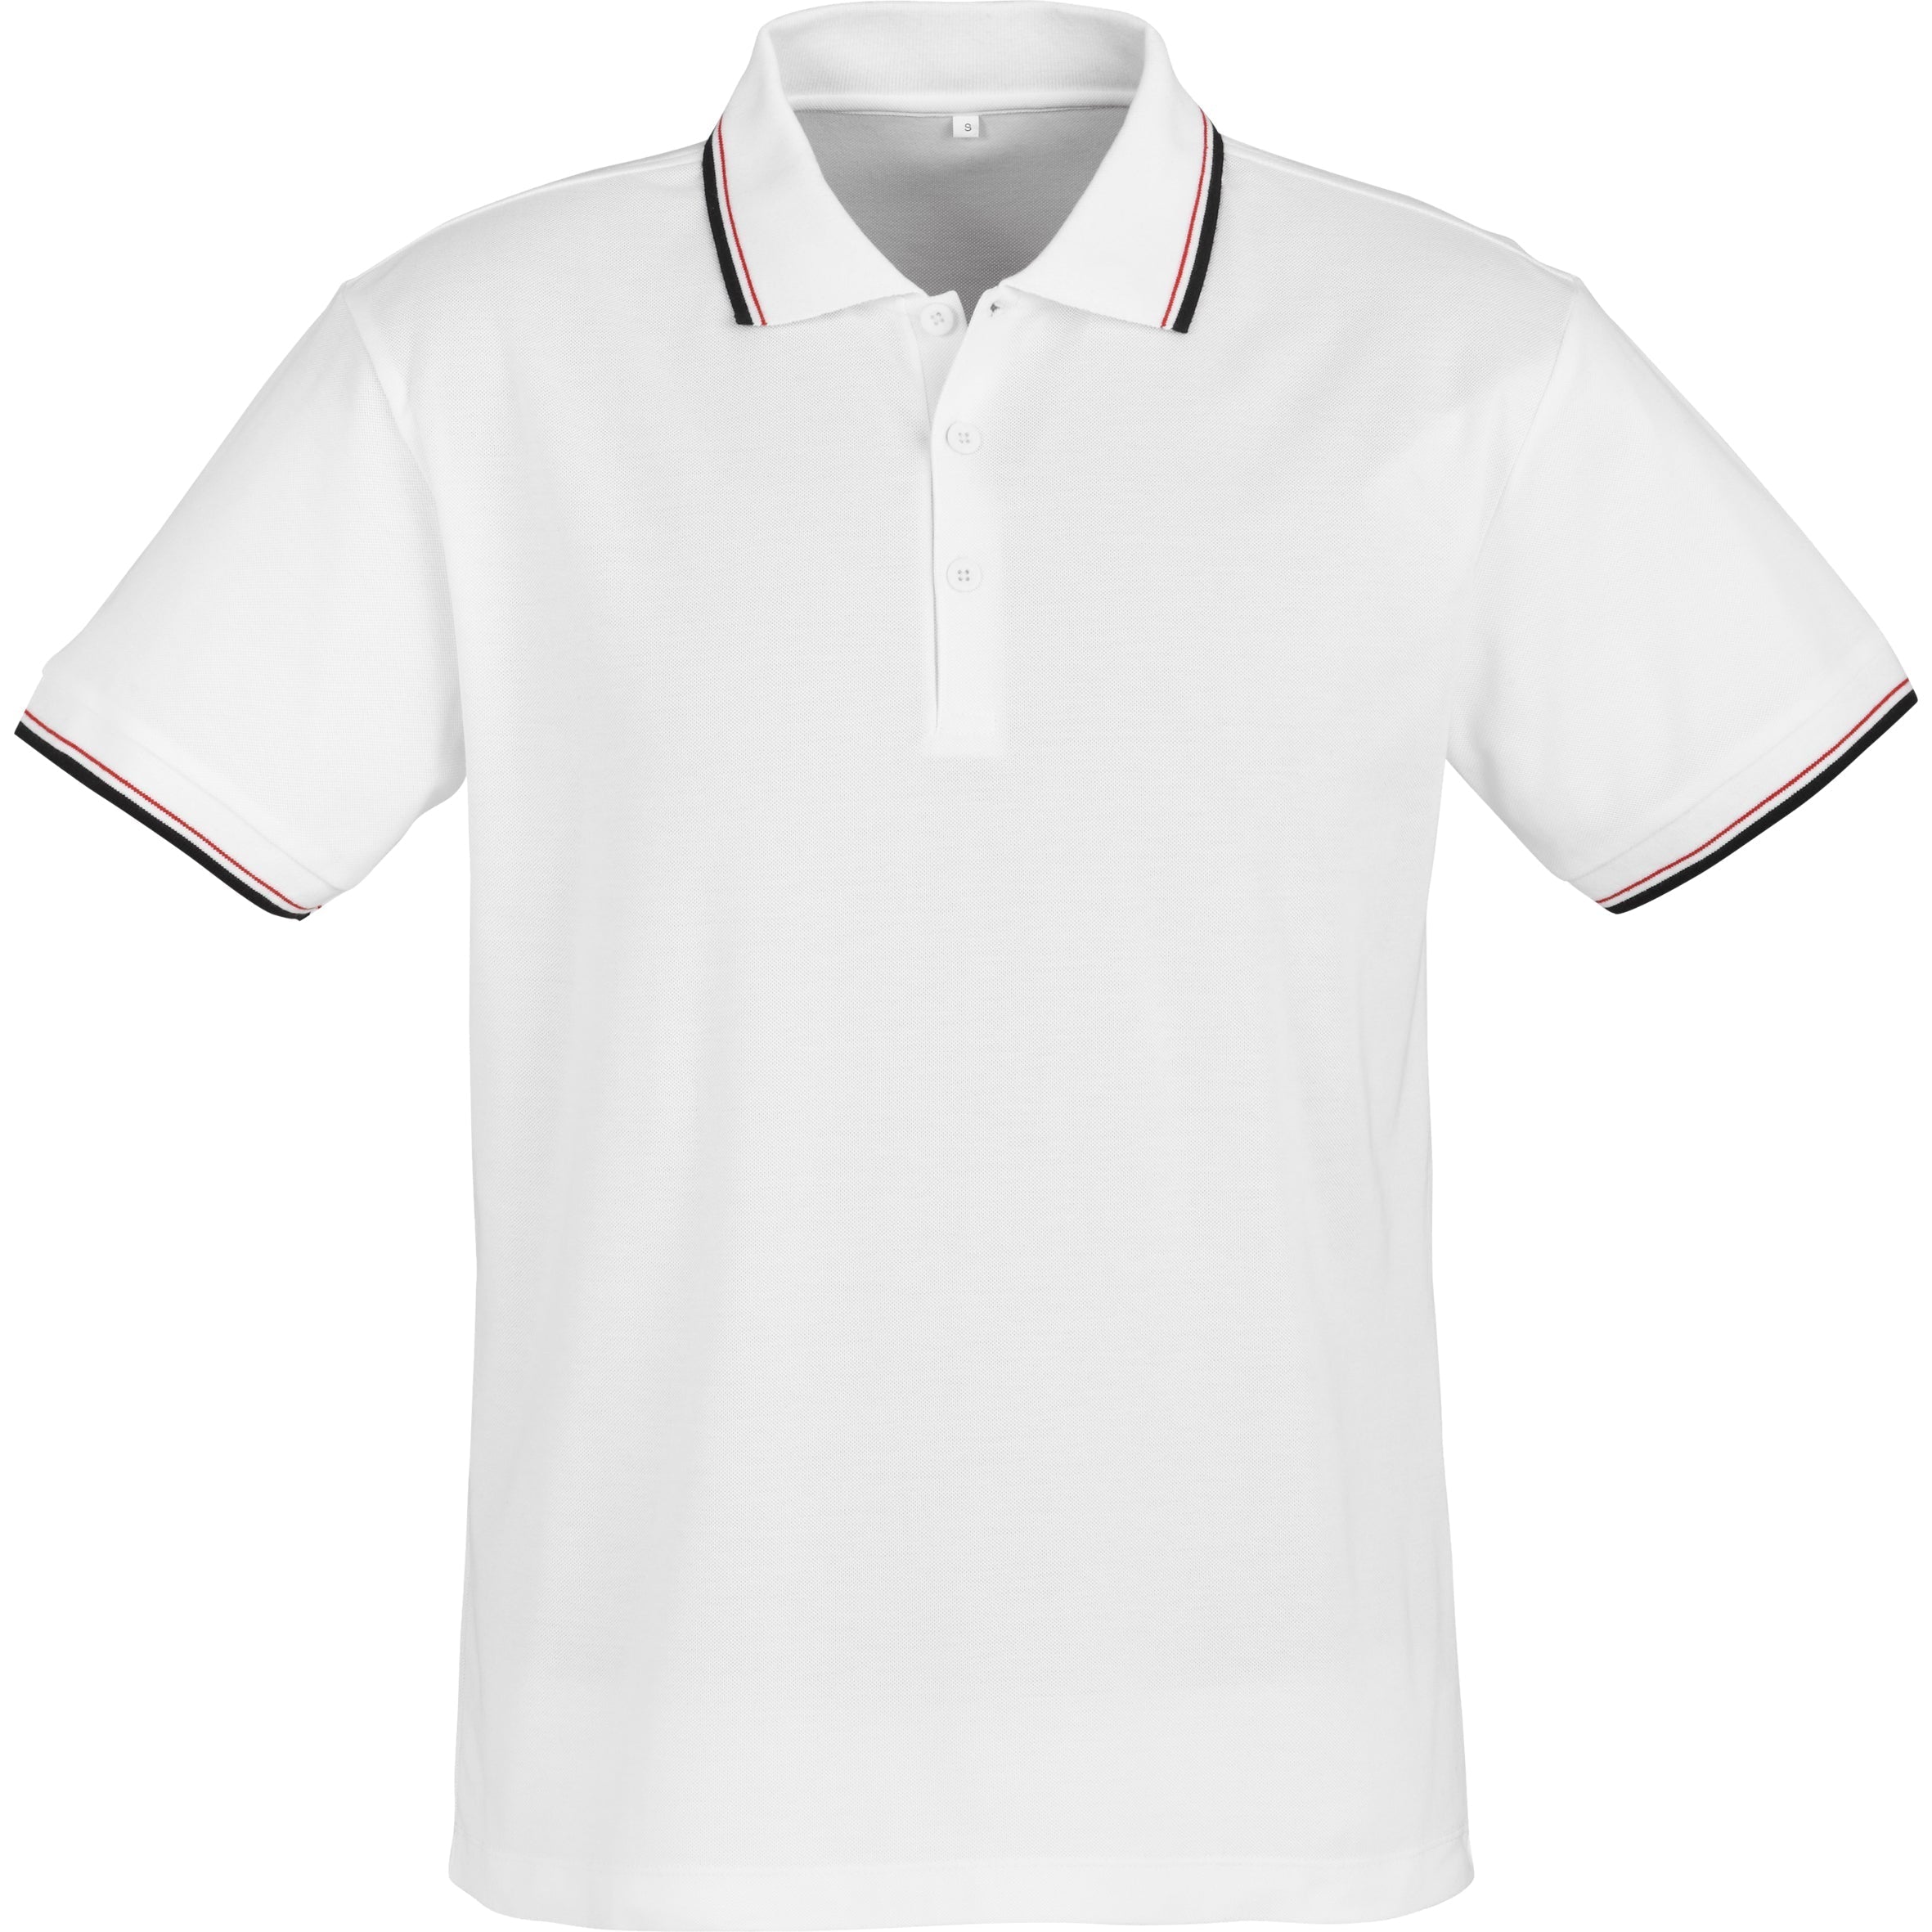 Mens Cambridge Golf Shirt - Black Red Only-L-White-W